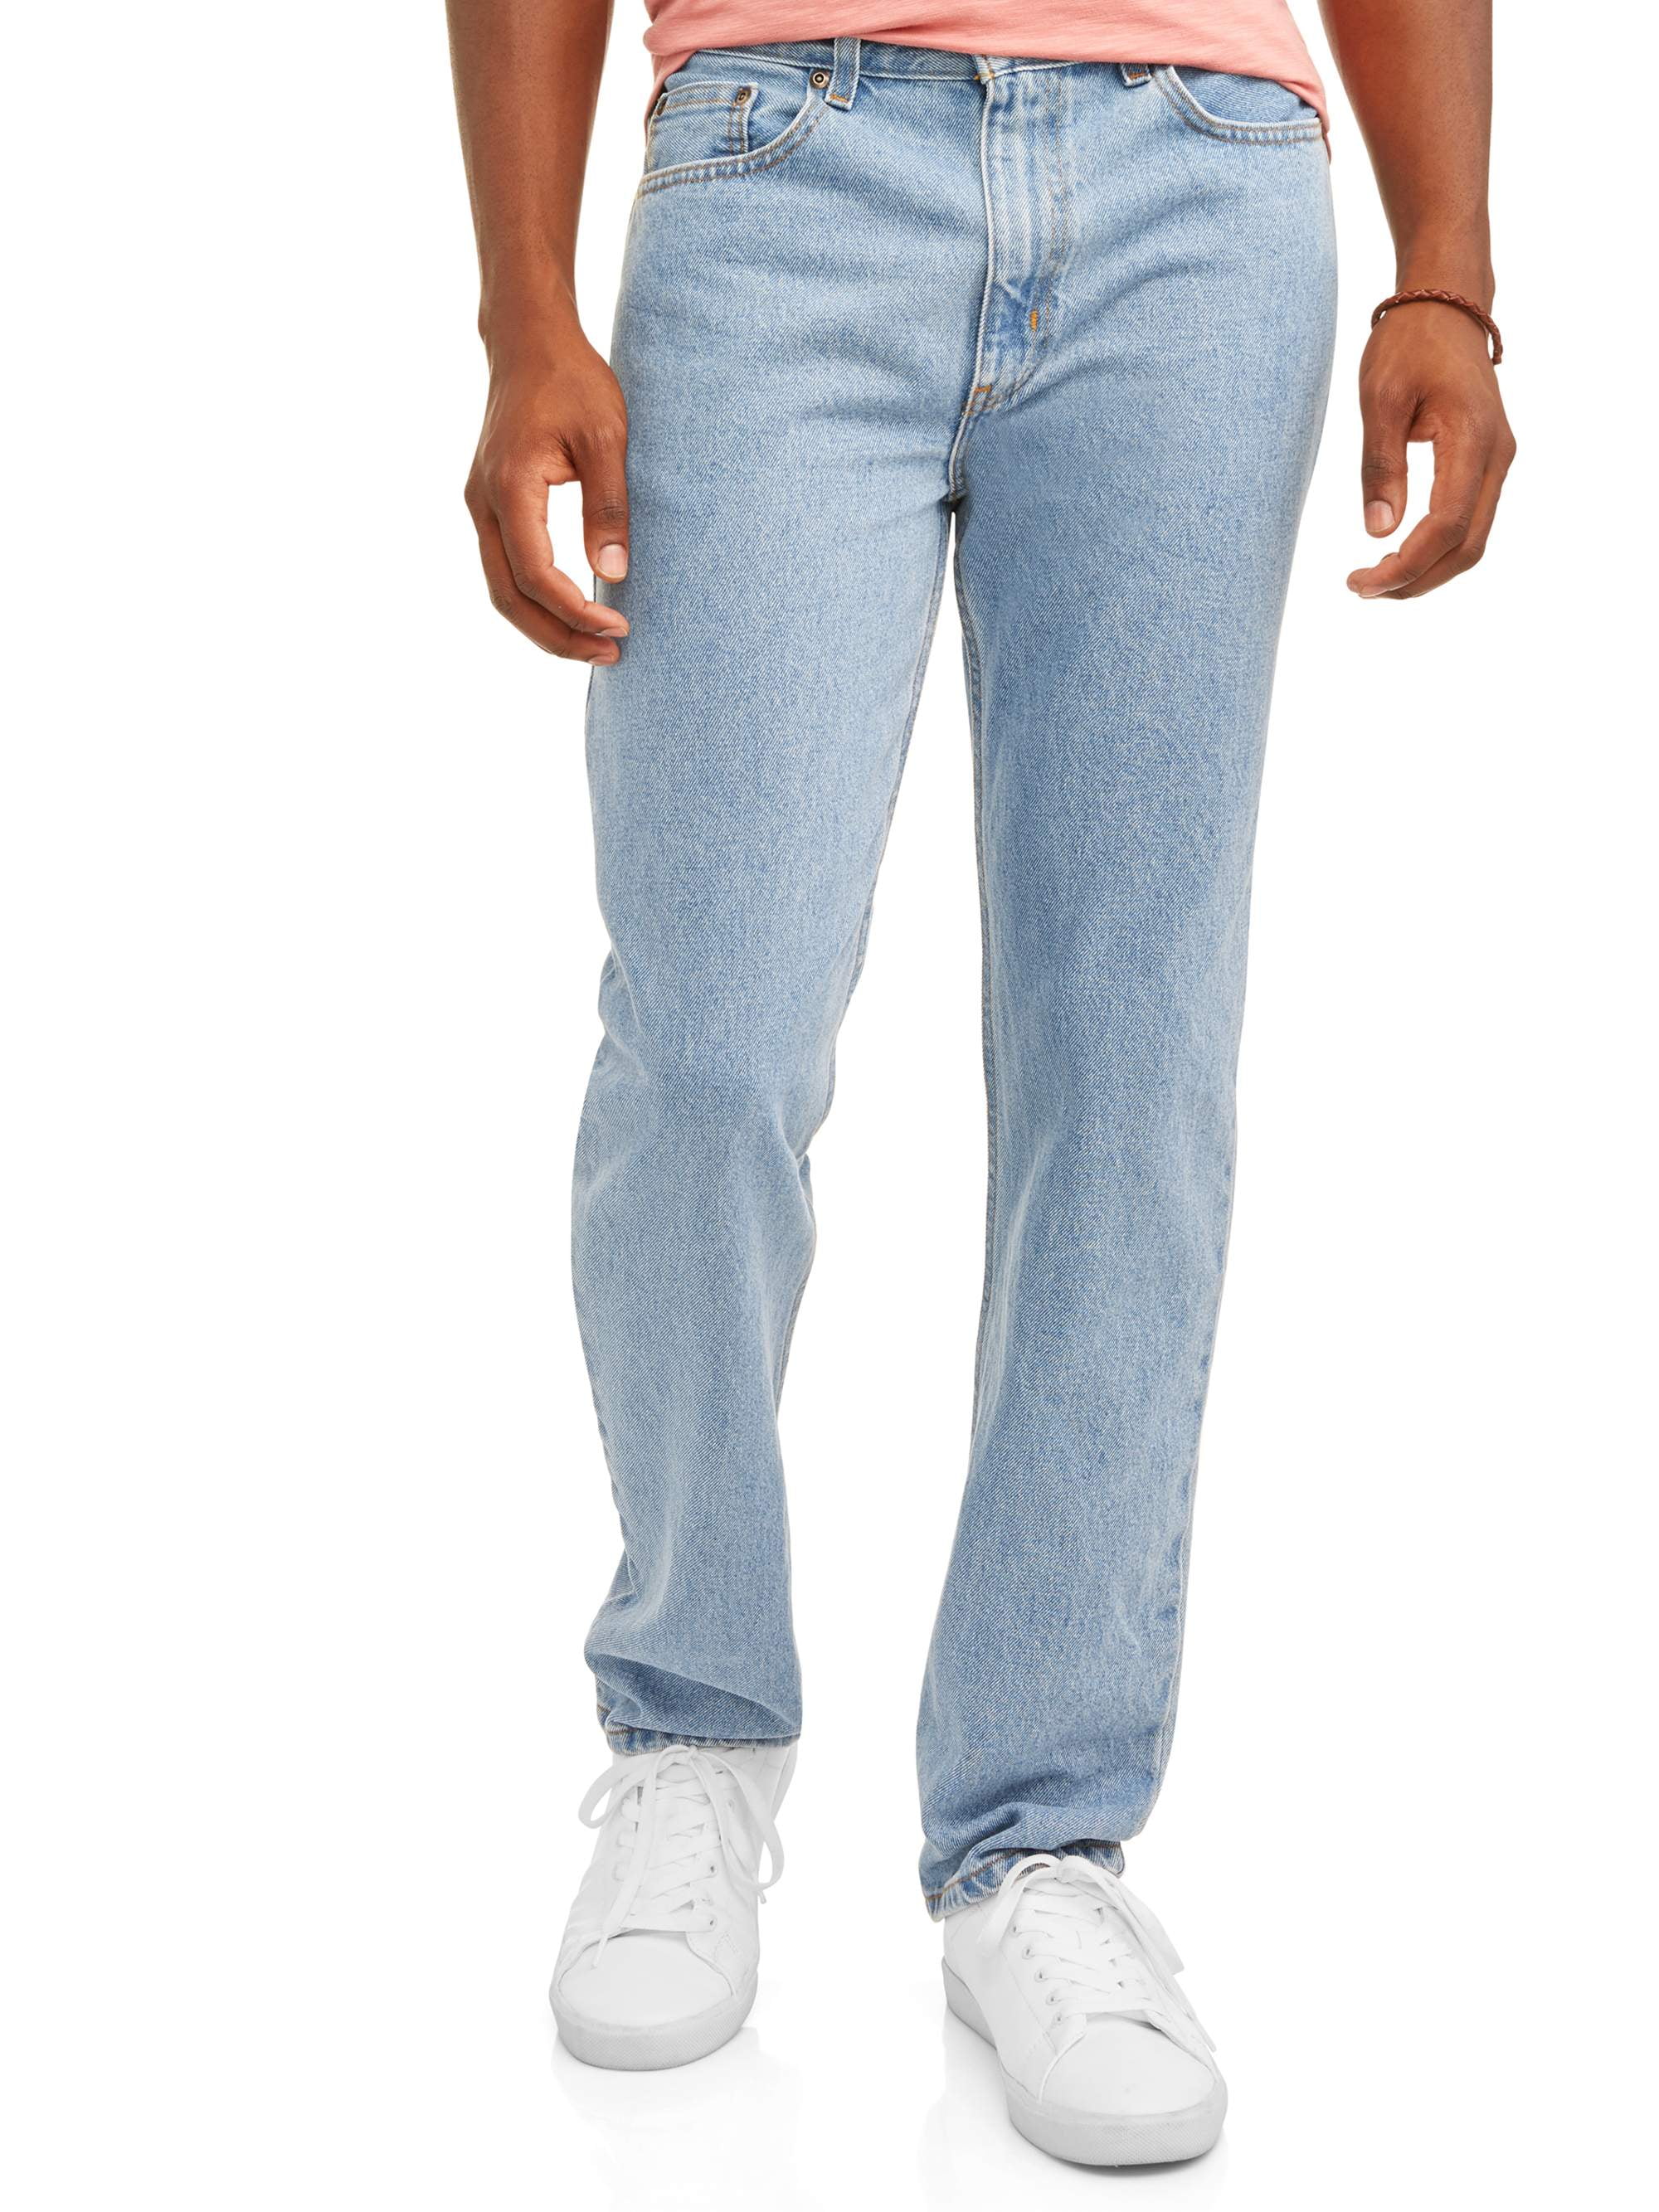 George Men's Regular Fit Jeans (31x30, Medium Wash) at